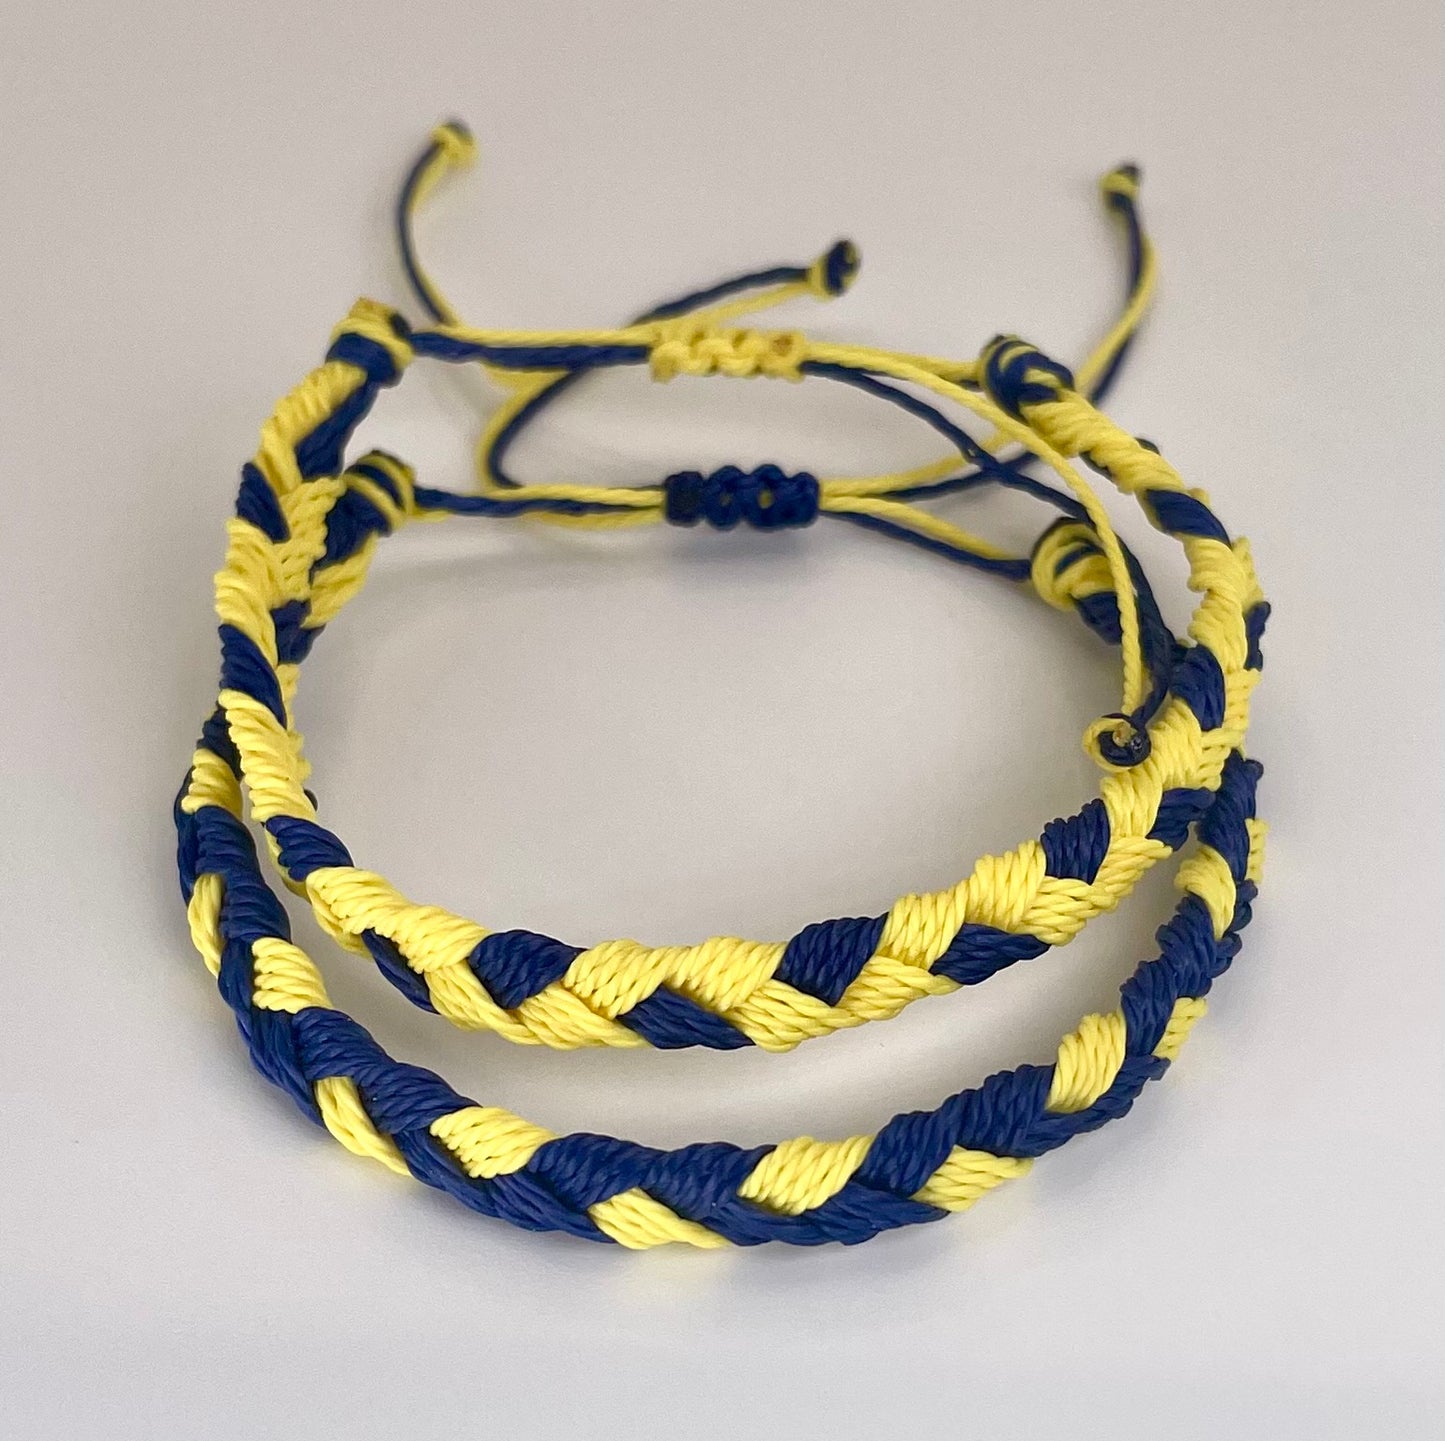 Maize & Blue Team Color Braided Bracelets - Set of 2